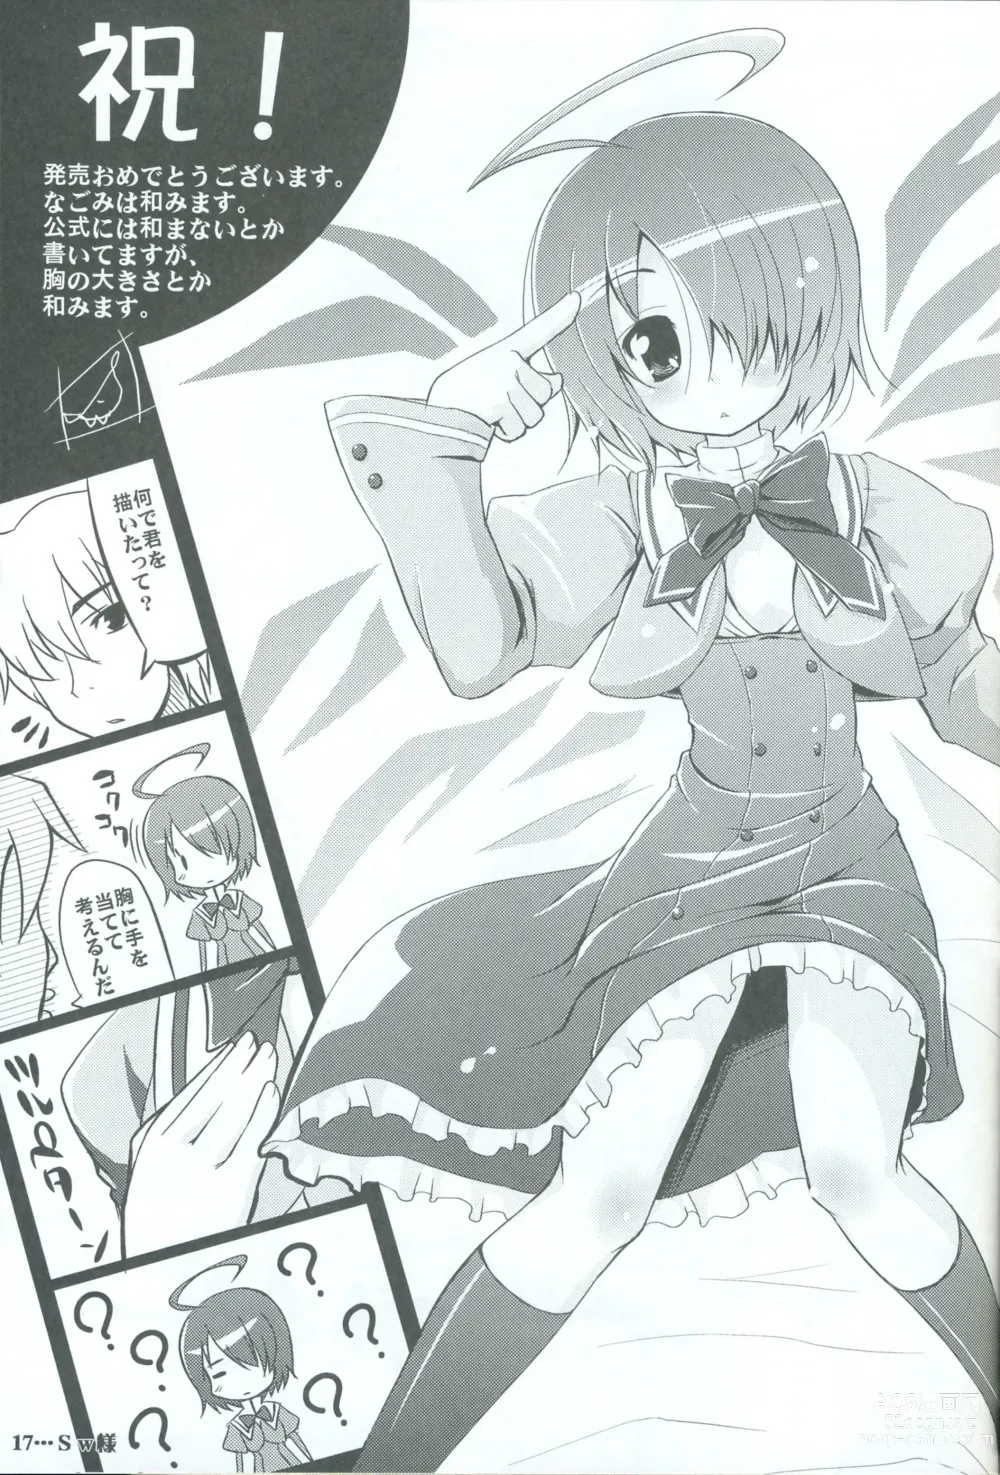 Page 18 of manga Akaneiro ni Somaru Saka SPECIAL GUESTS ILLUSTRATIONS